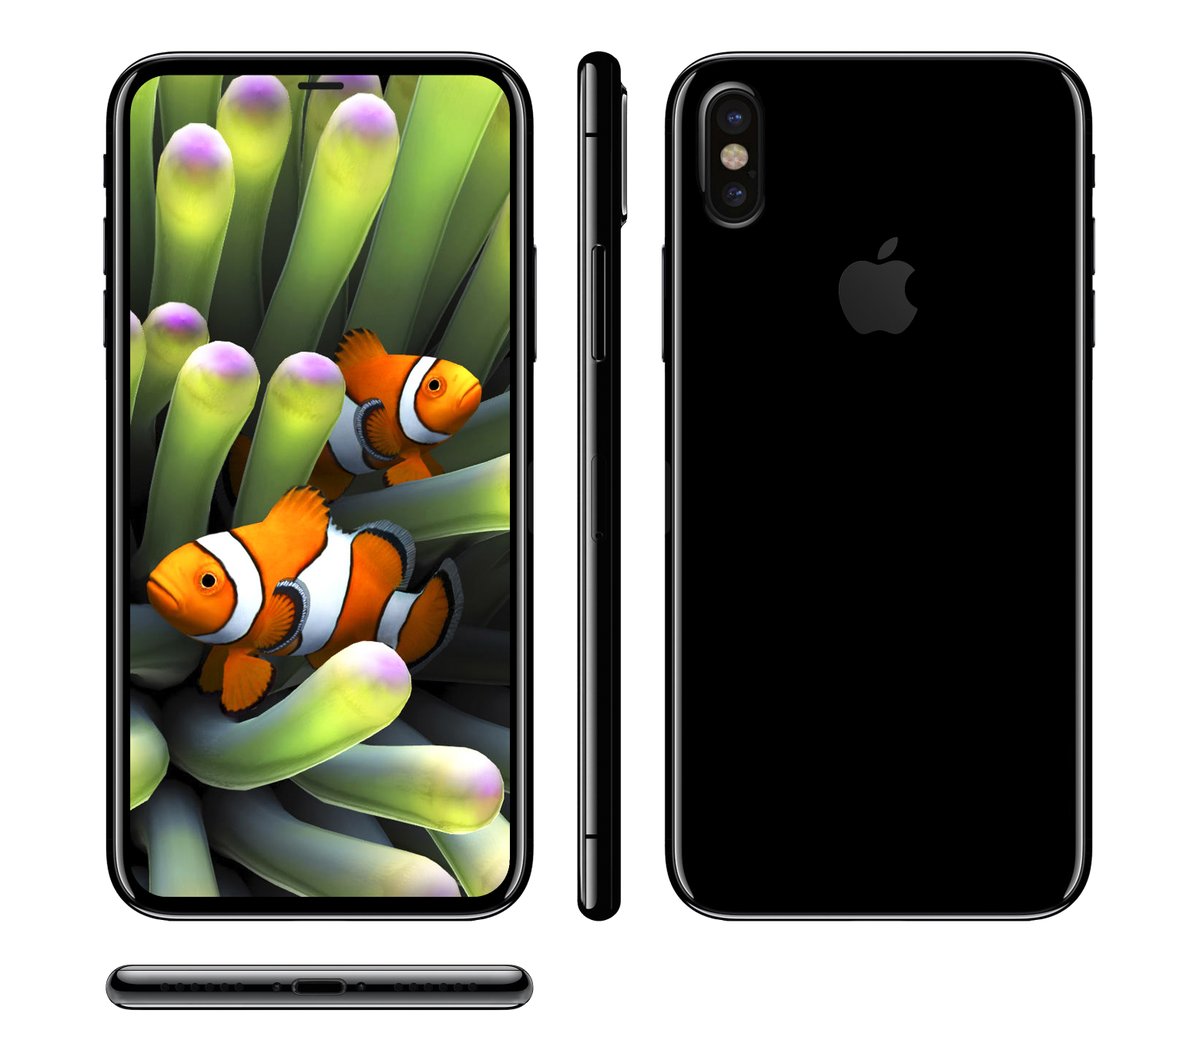 Apple iPhone 8 both look